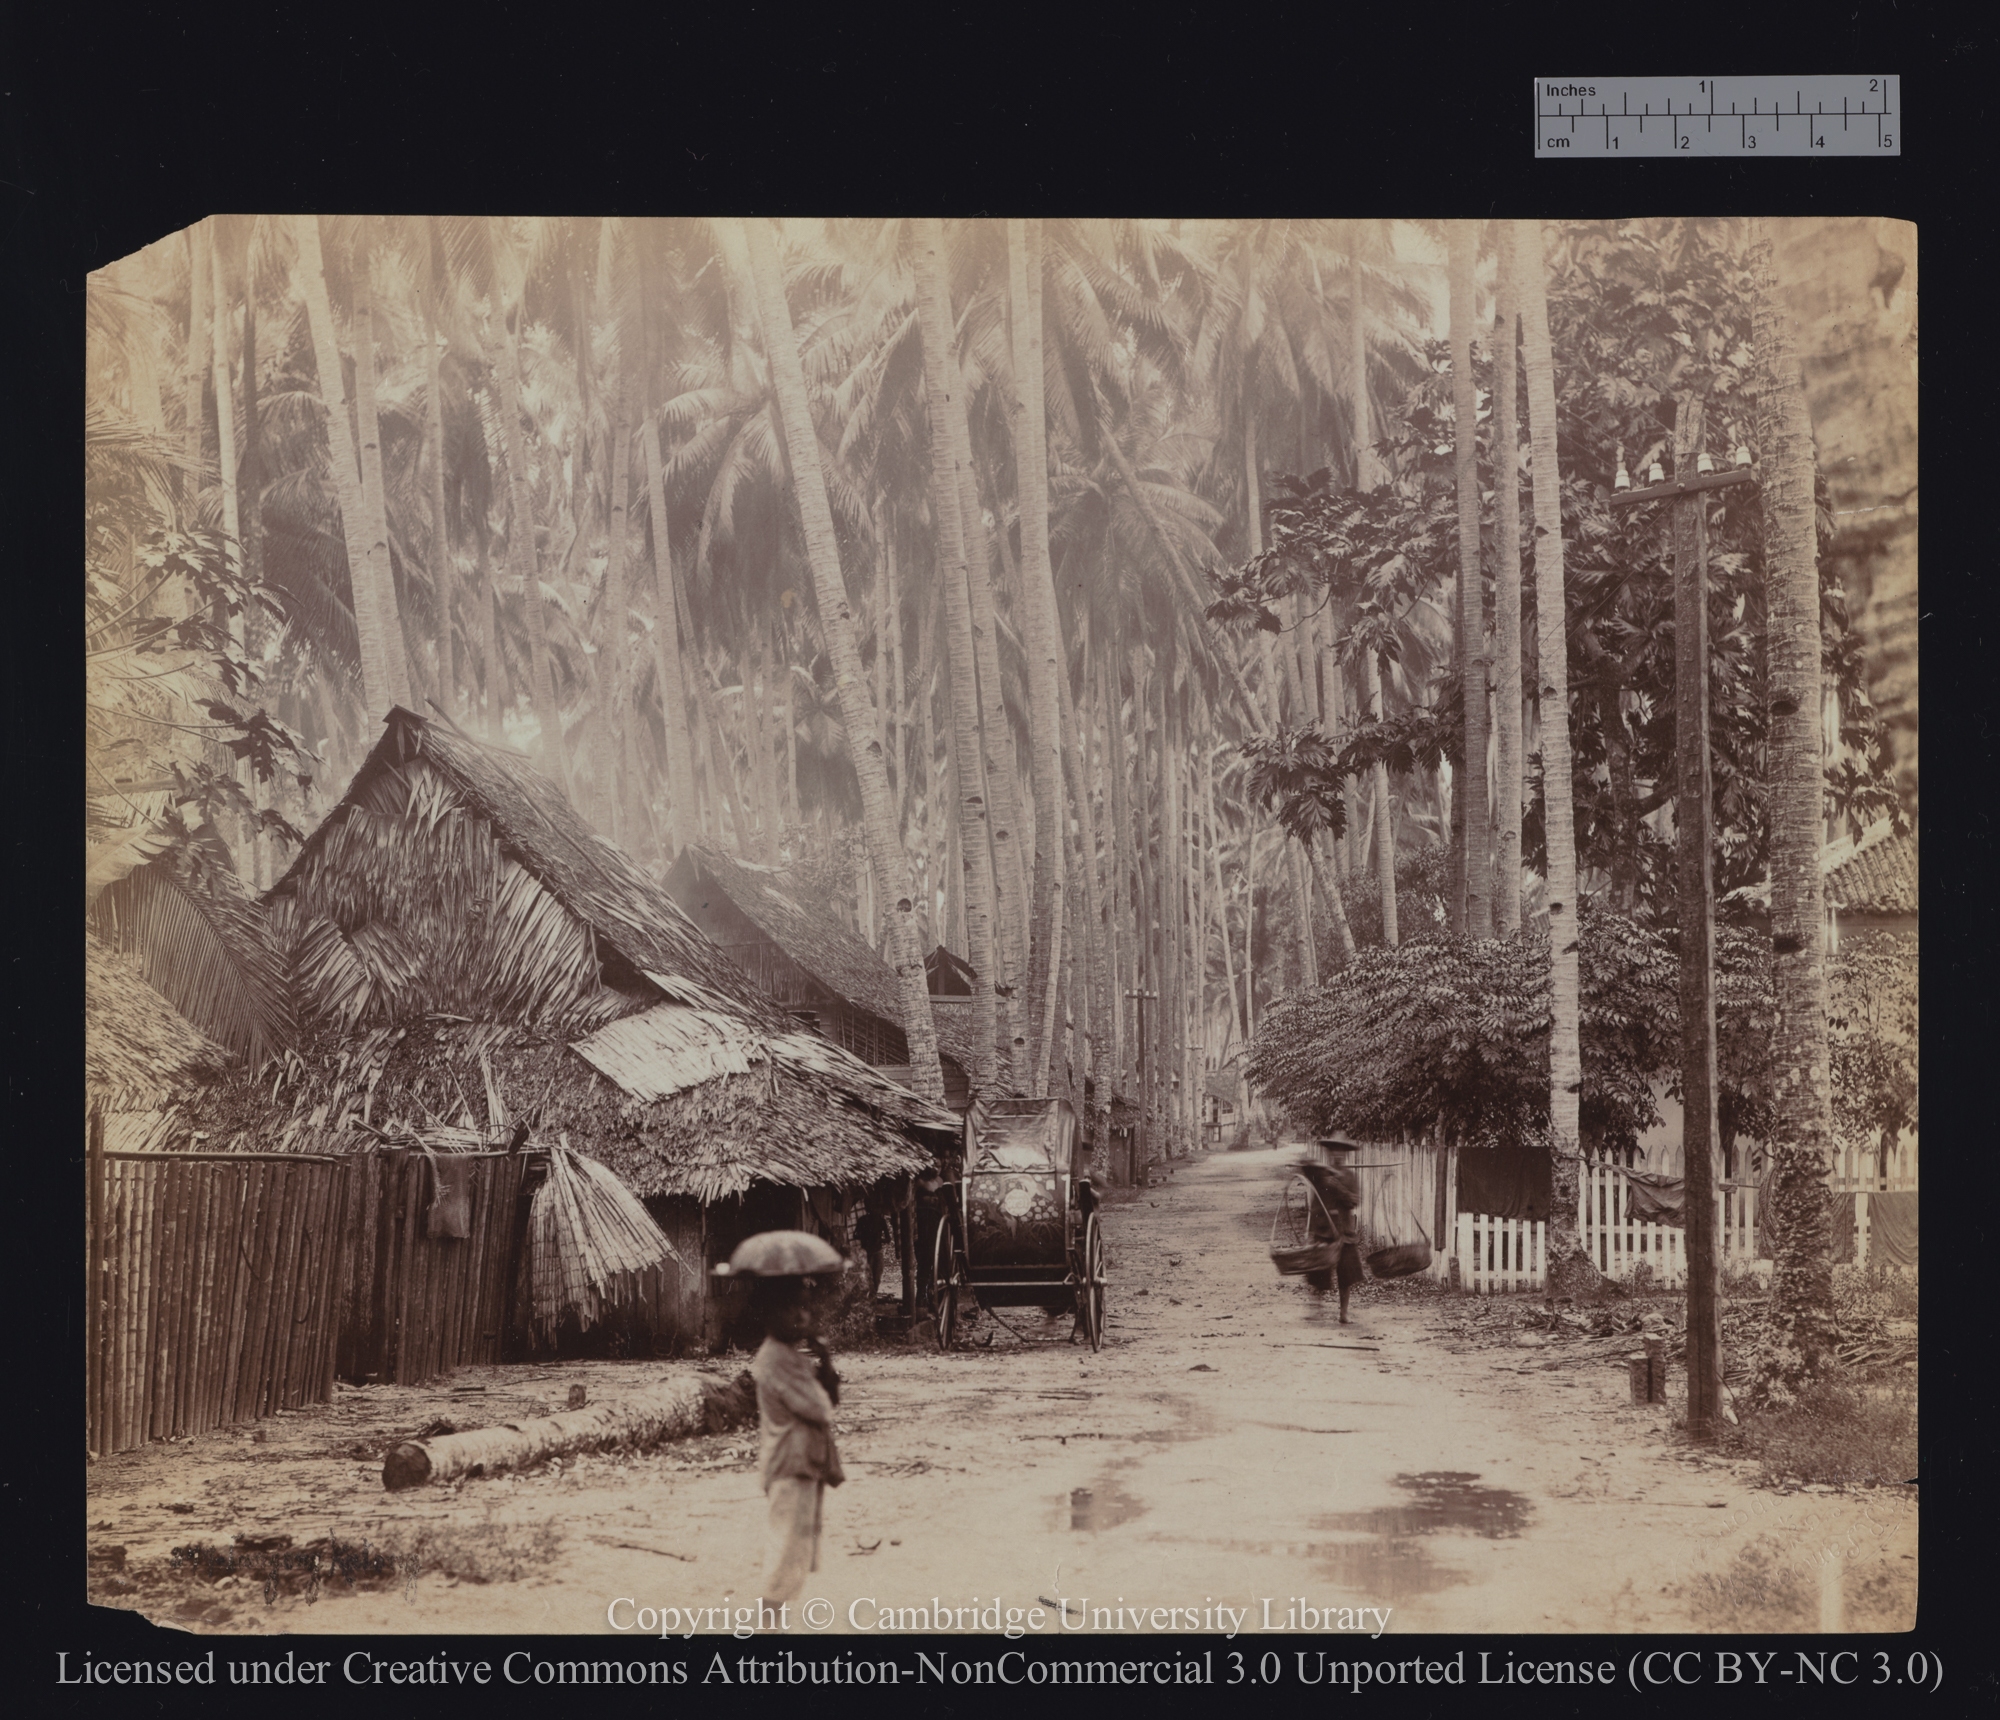 [Coconut plantation, ? Straits Settlements], 1890 - 1899